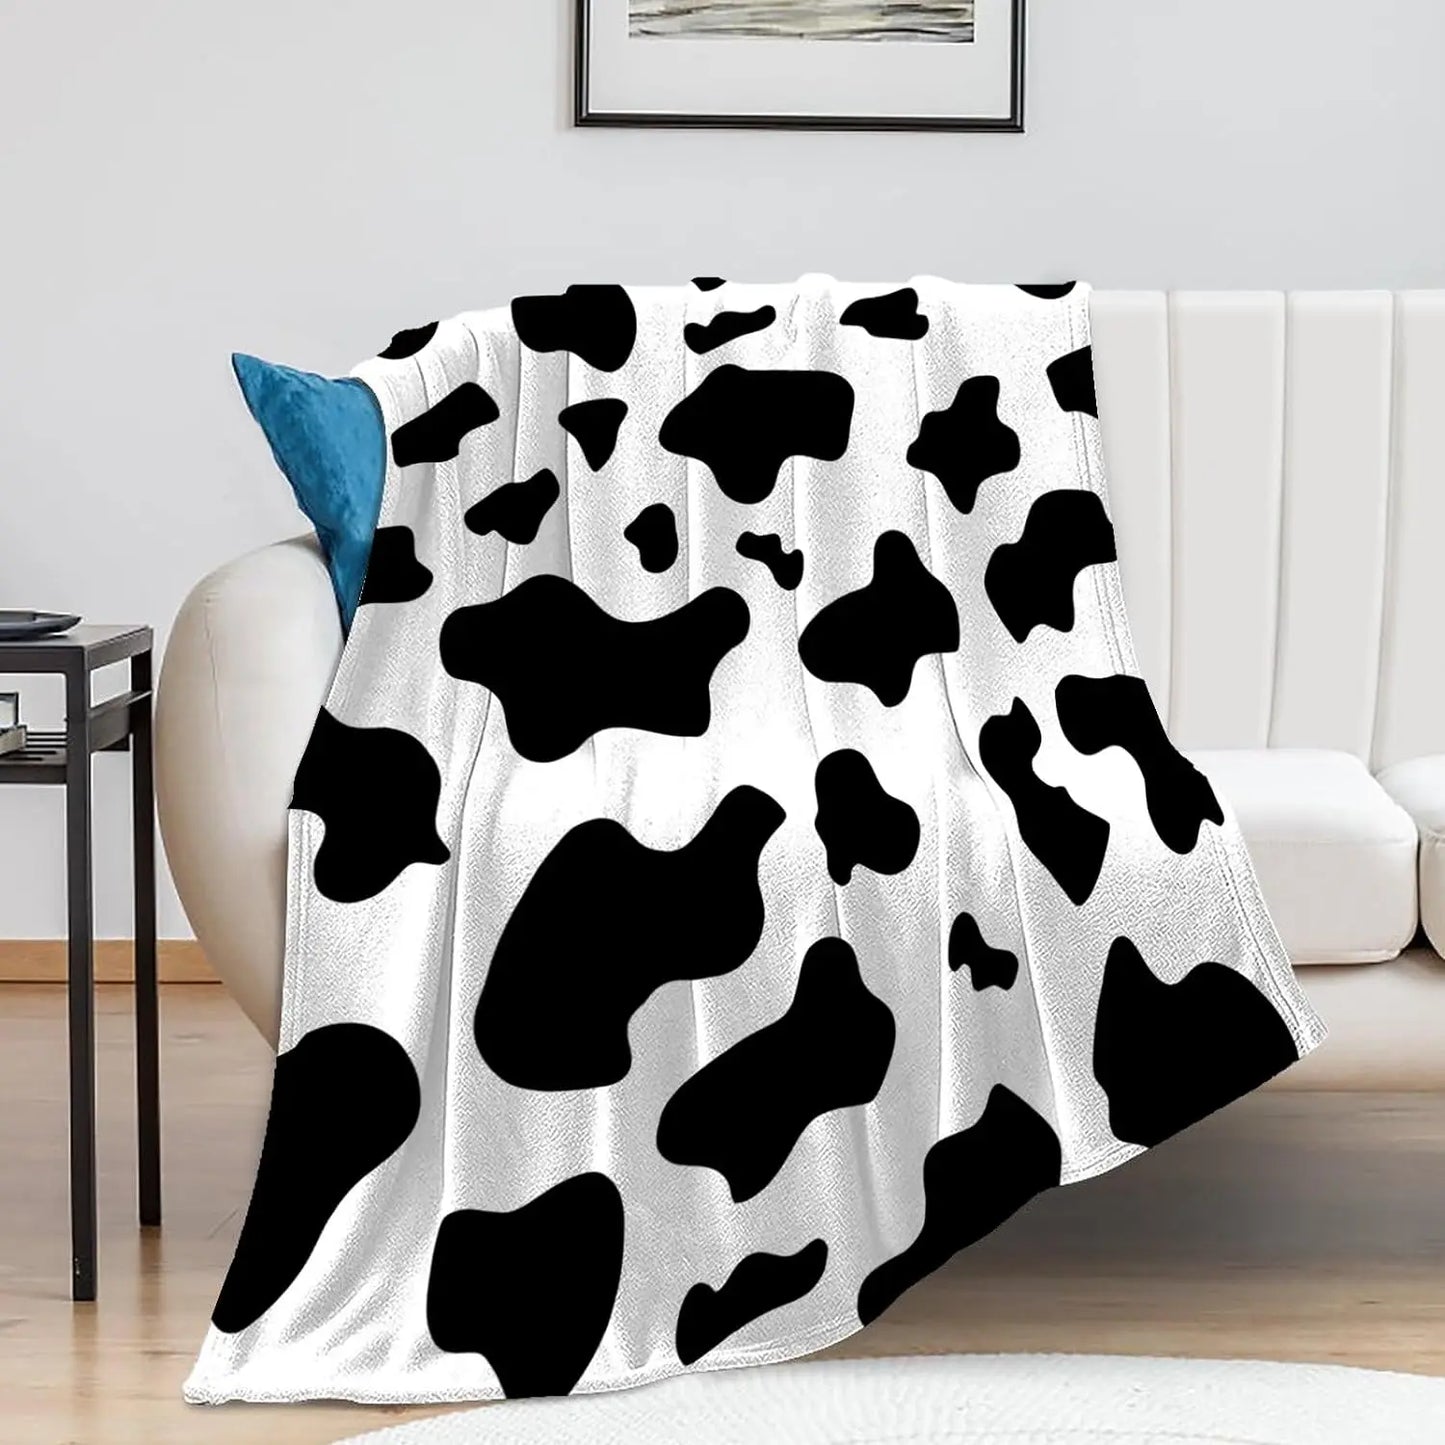 Cow Print Flannel Blanket